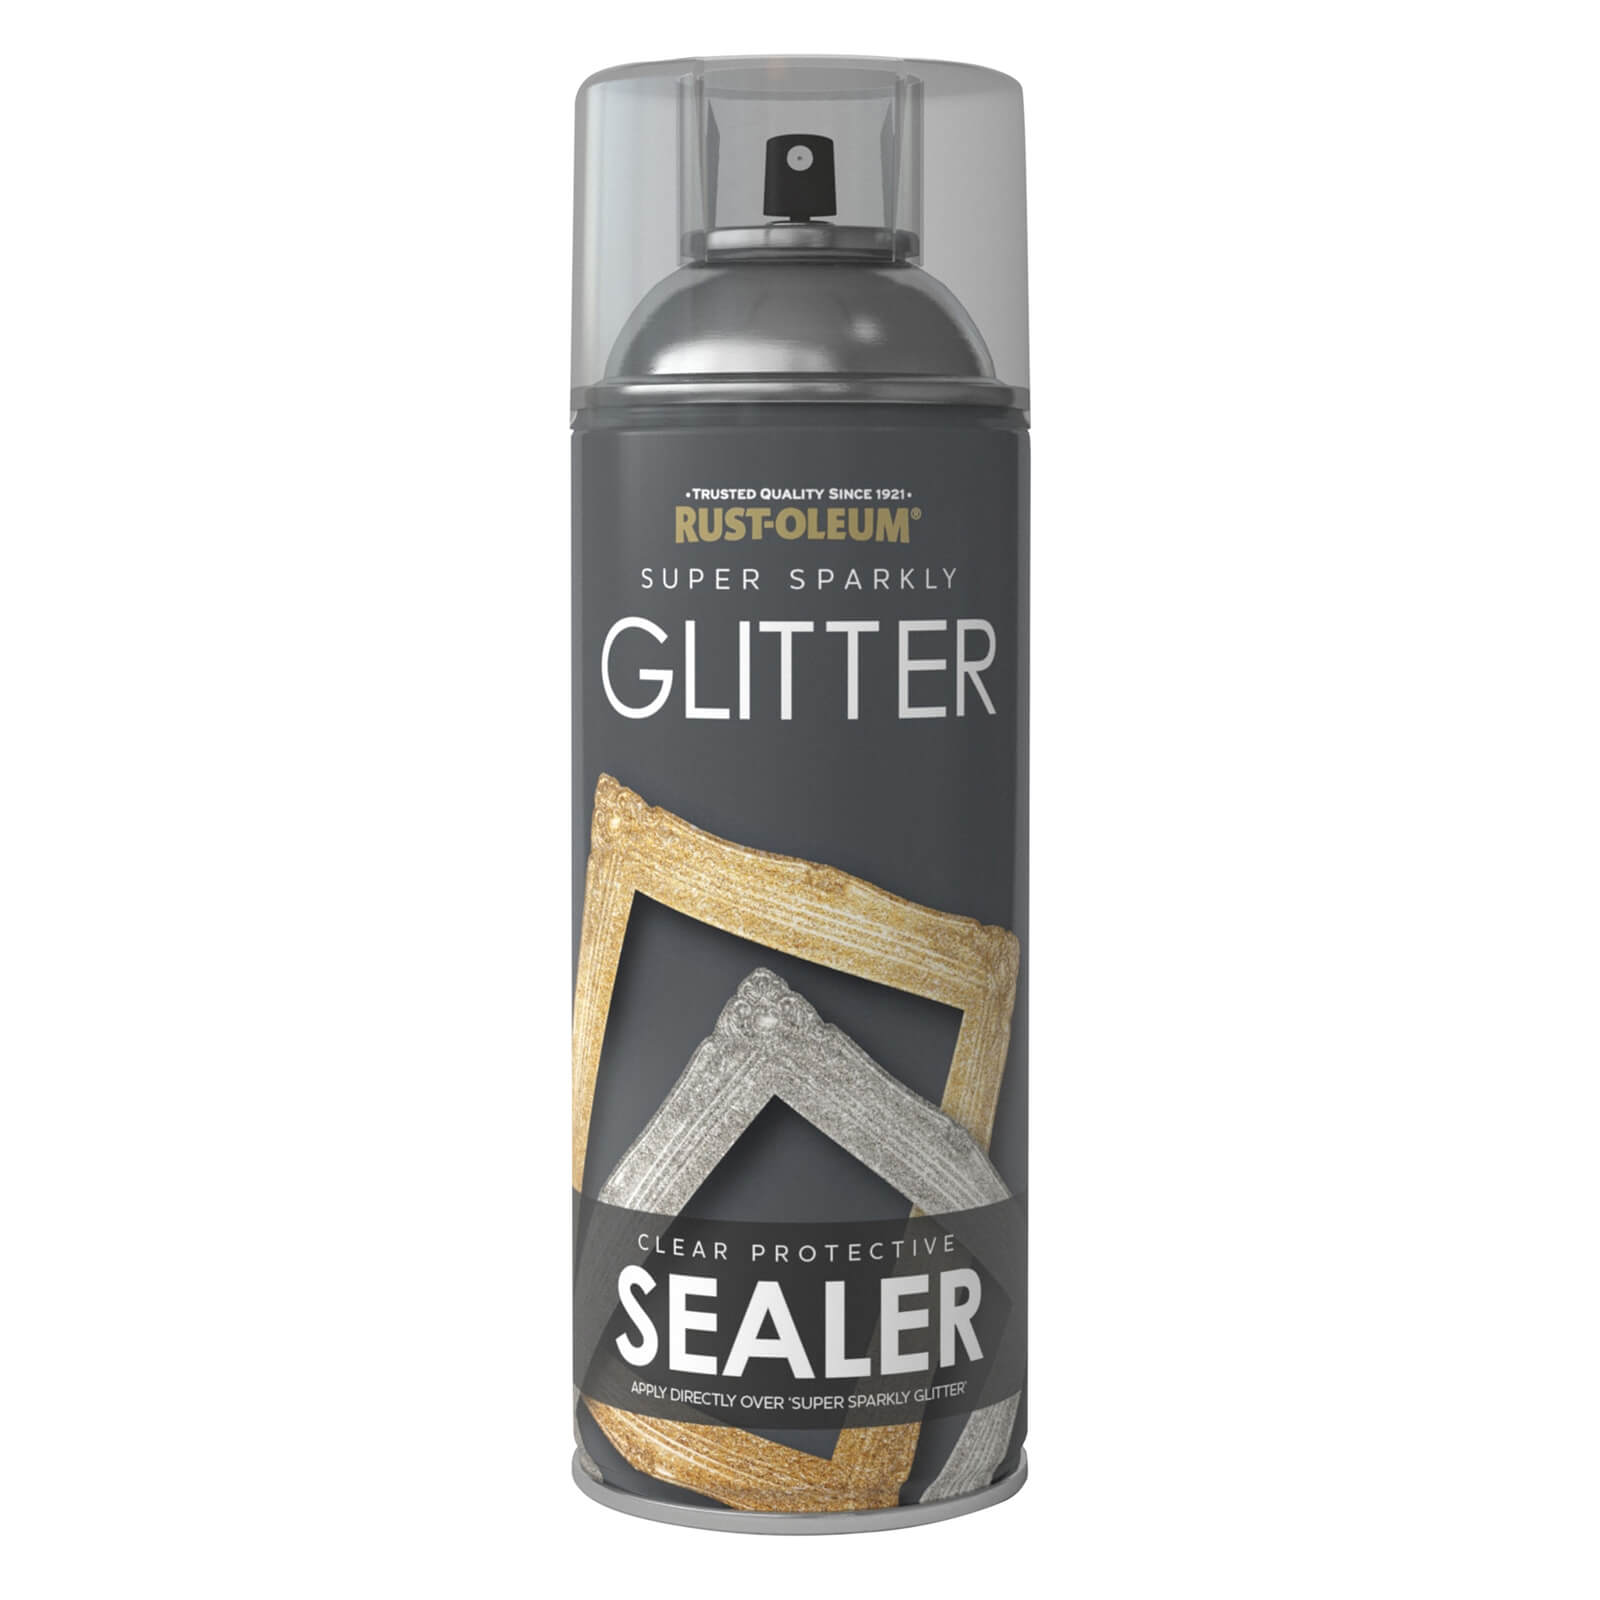 Rust-Oleum Super Sparkly Glitter Sealer - 400ml